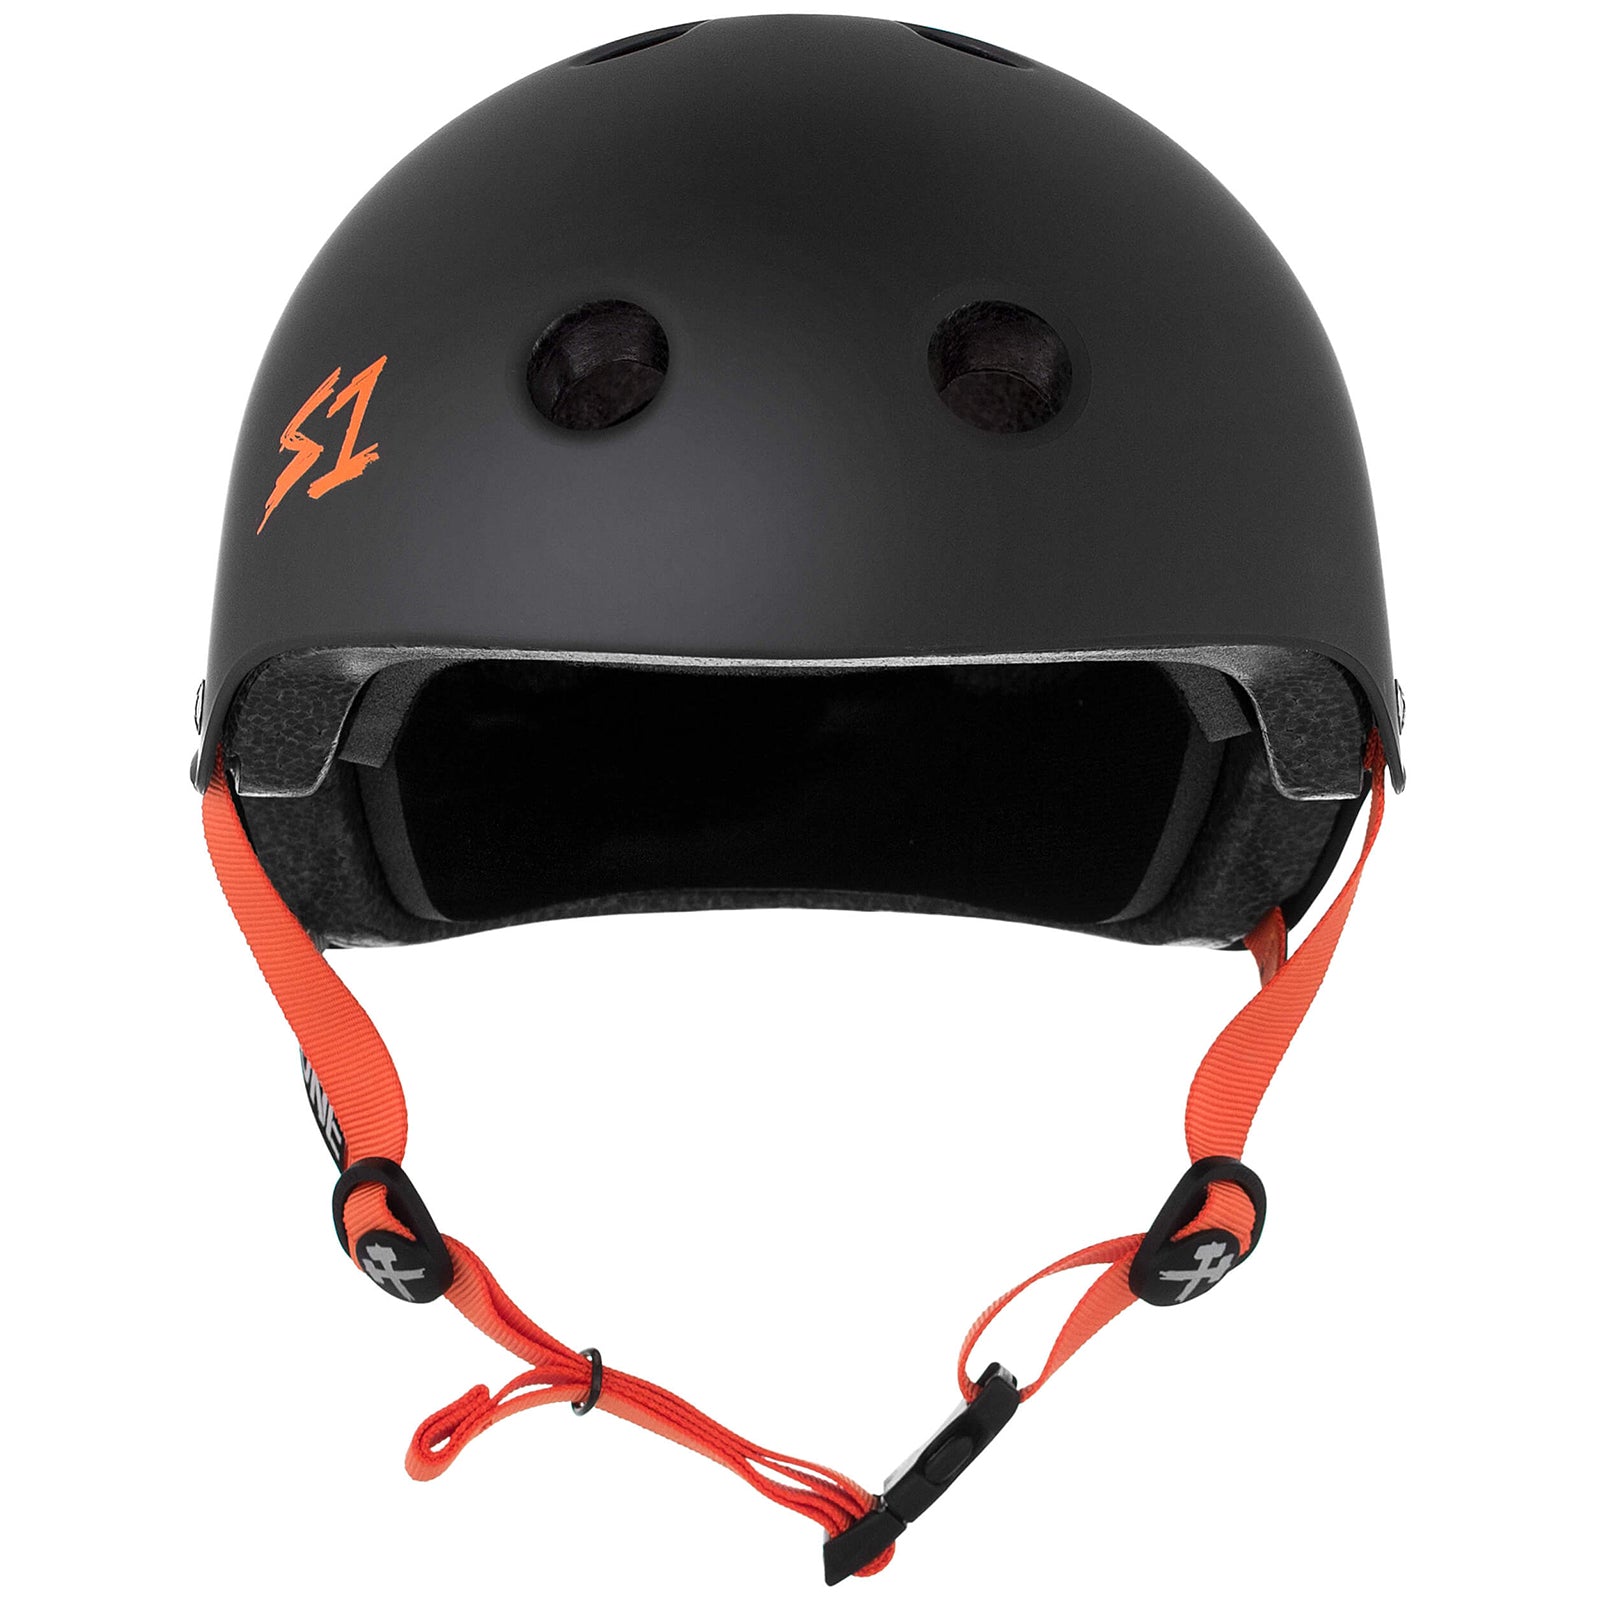 S1 Lifer Helmet - Mast black helmet with orange straps